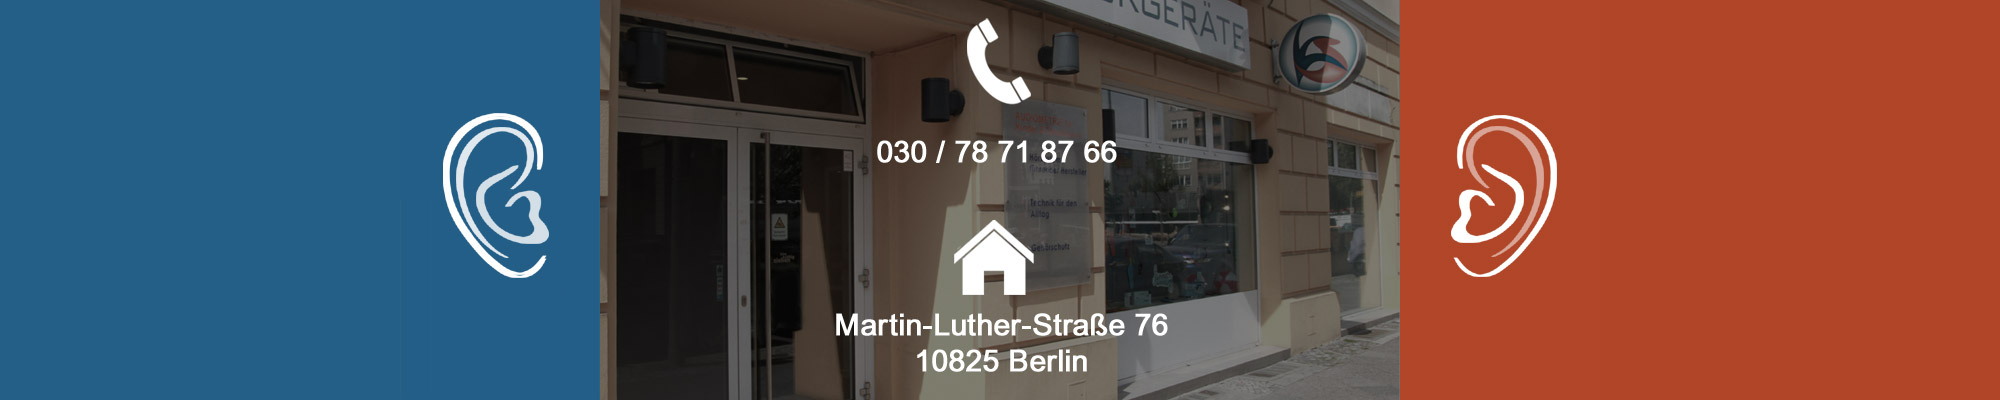 Adresse und Telefonnummer der KS-Hörgeräte Berlin